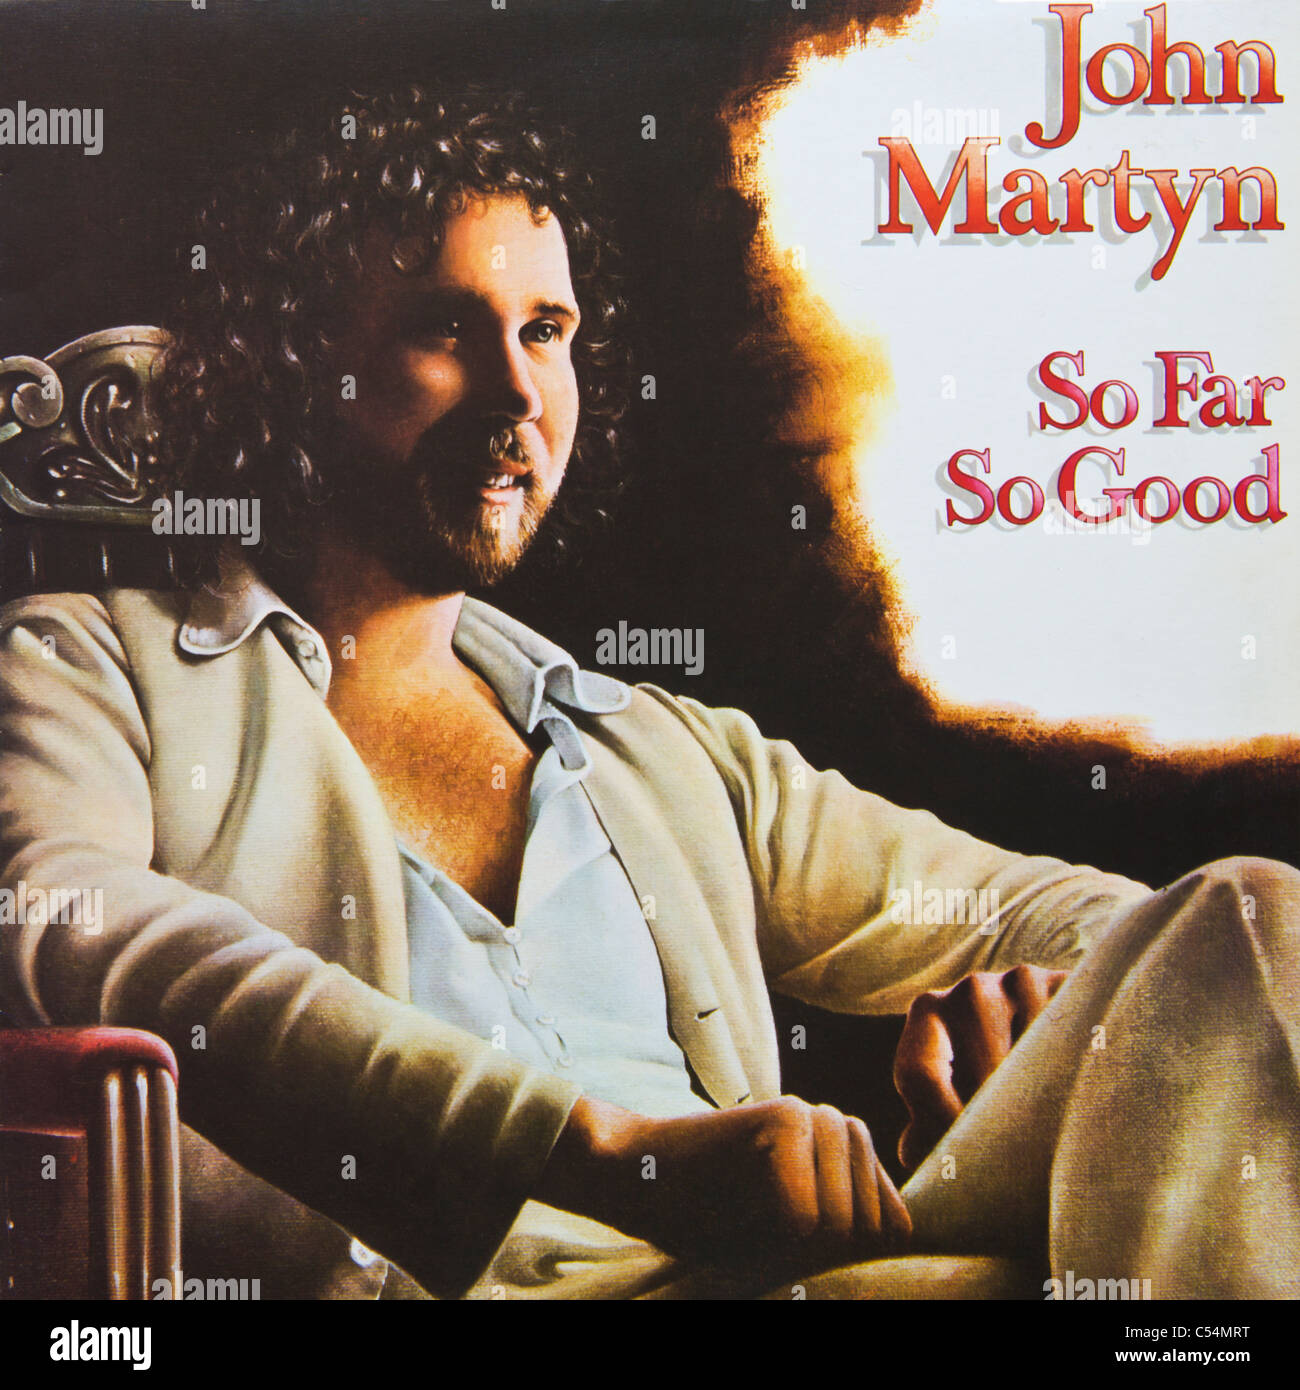 Cover of original vinyl album So Far So Good by John Martyn released 1977 on Island Records Stock Photo